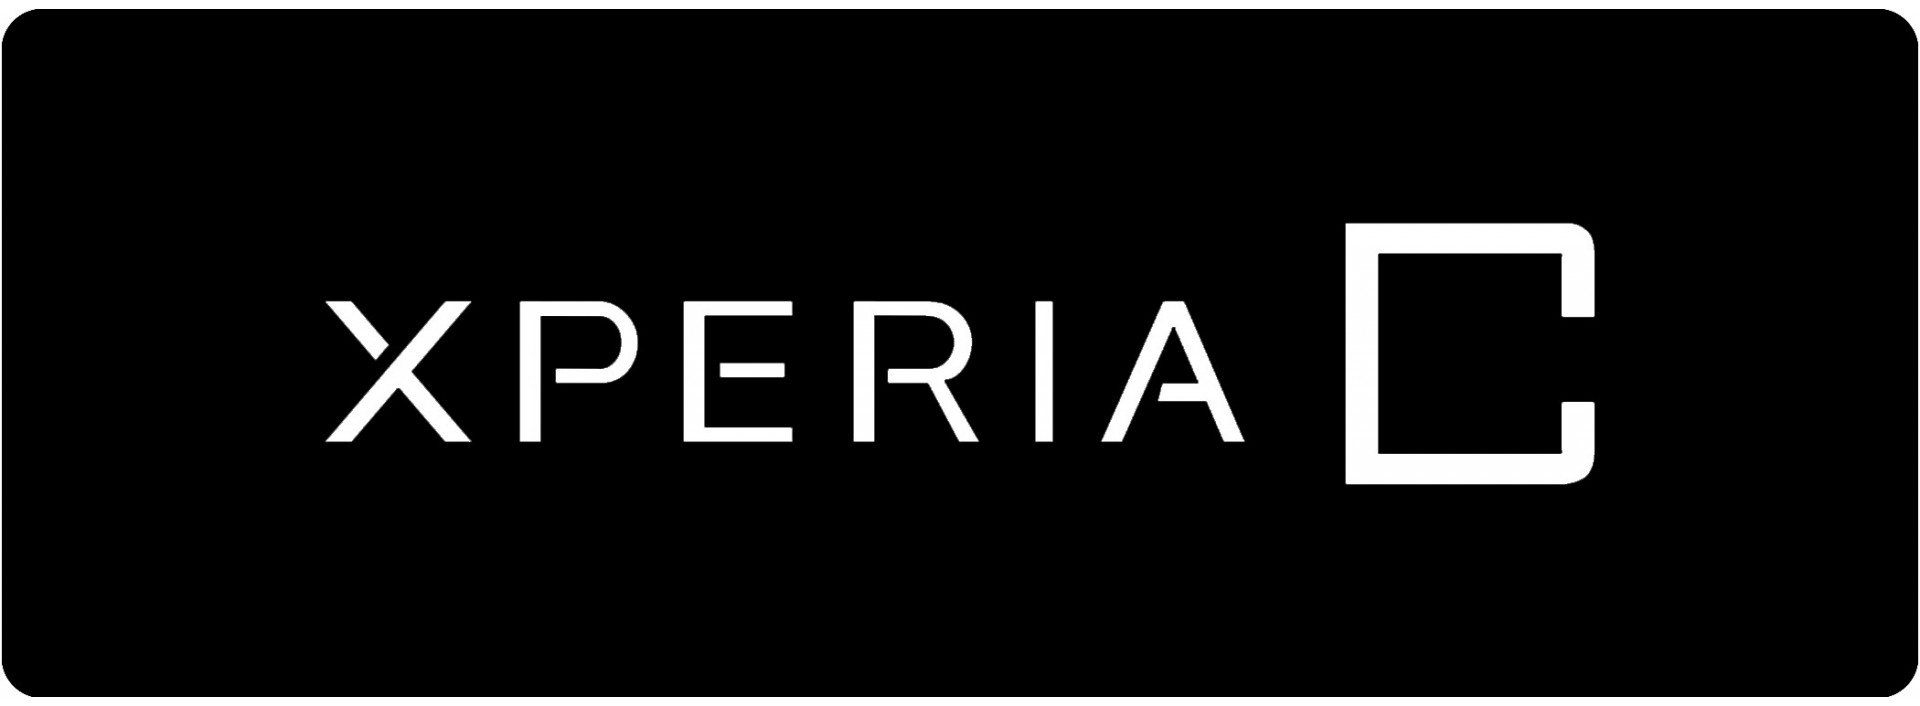 Fundas para Sony Serie Xperia C